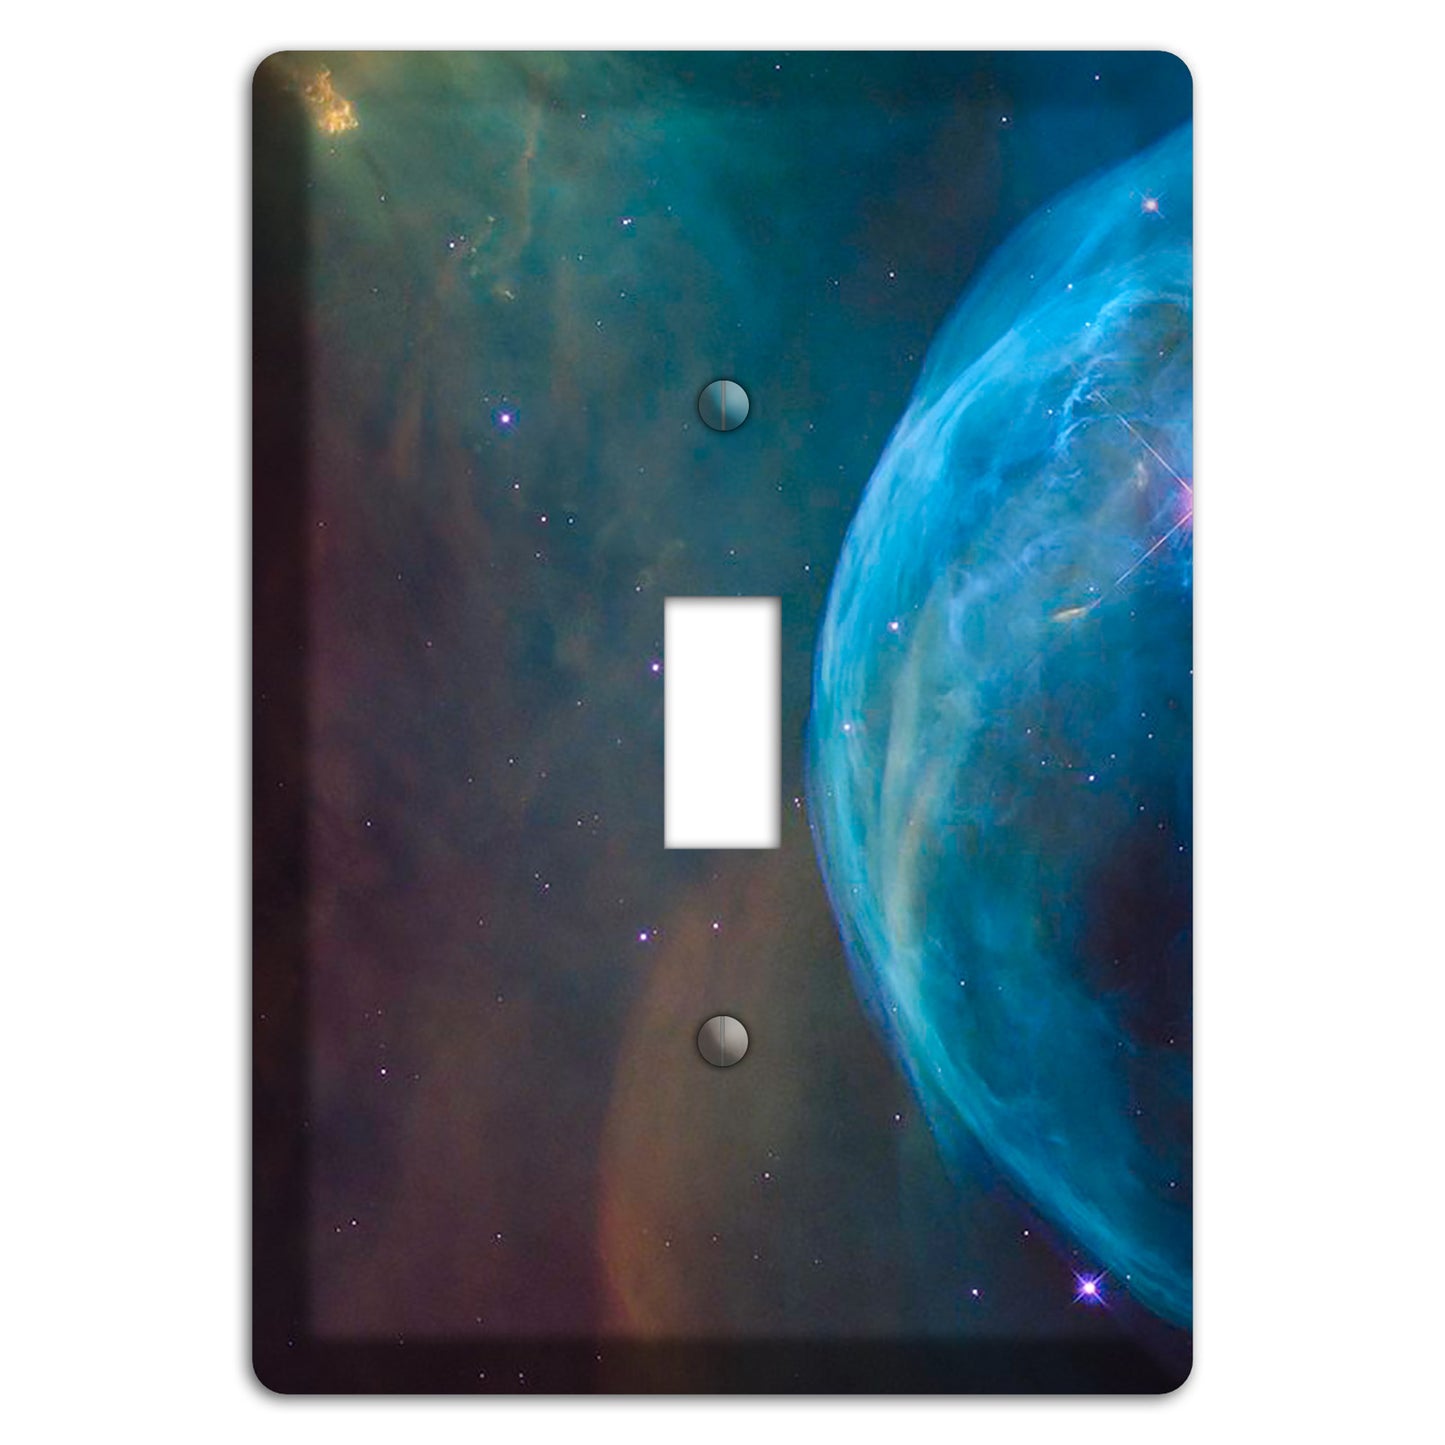 Bubble Nebula Cover Plates